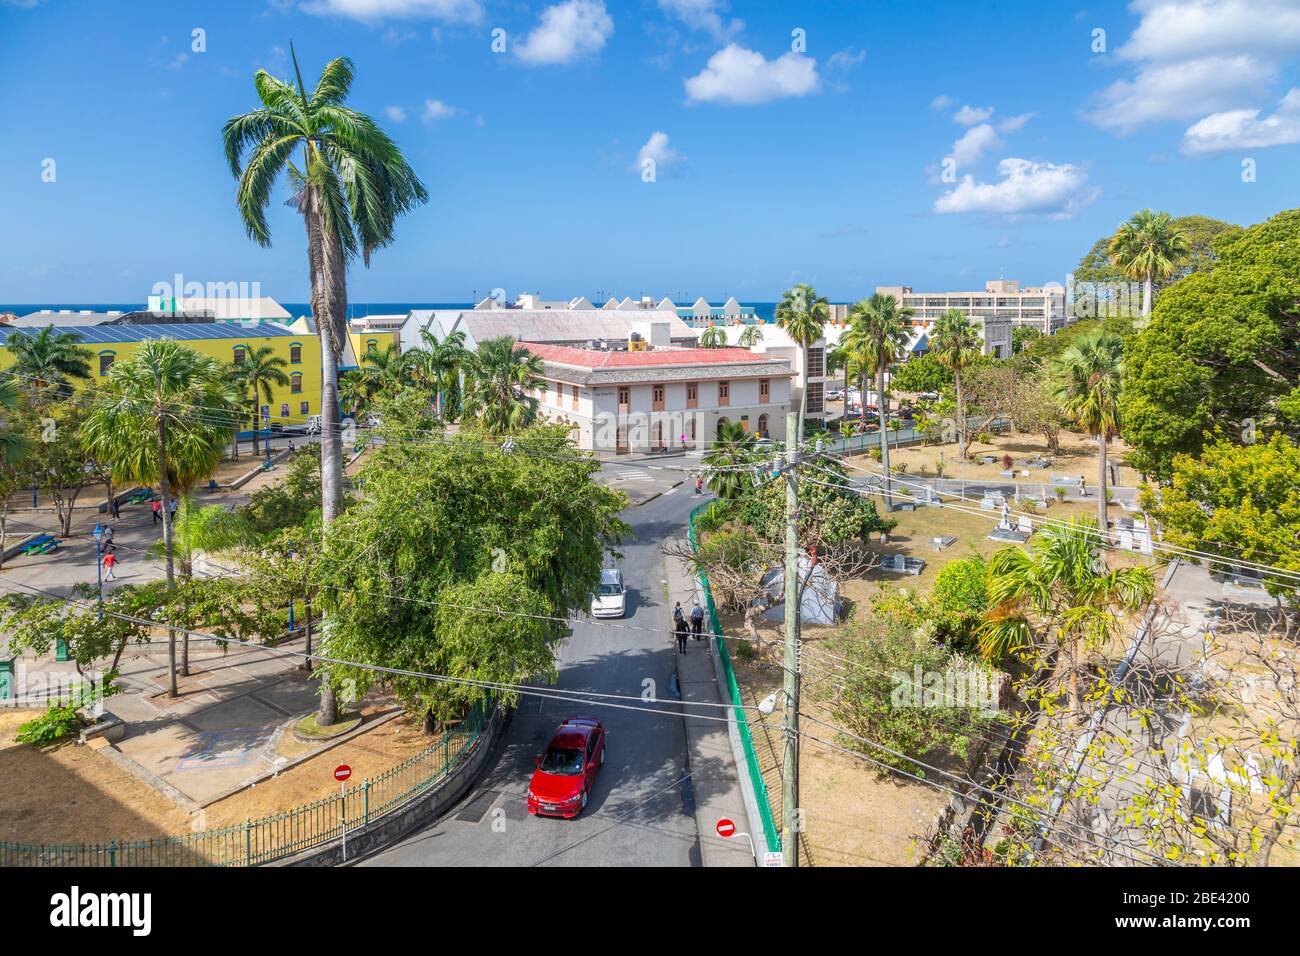 1,700+ Bridgetown Barbados Stock Photos, Pictures & Royalty-Free